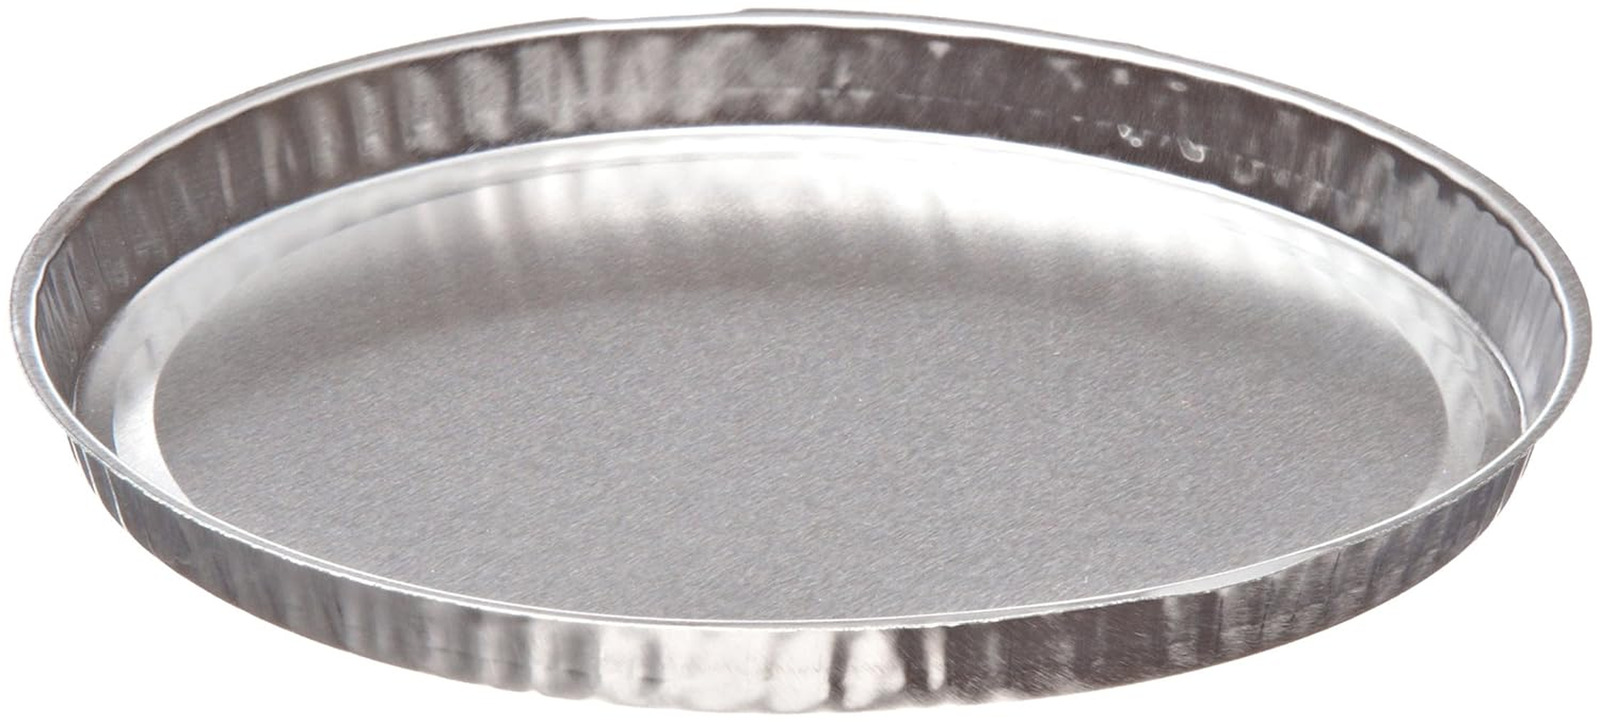 Aluminum Sample Pan, Single Use Disposable Pan, Perfect Surface Finish